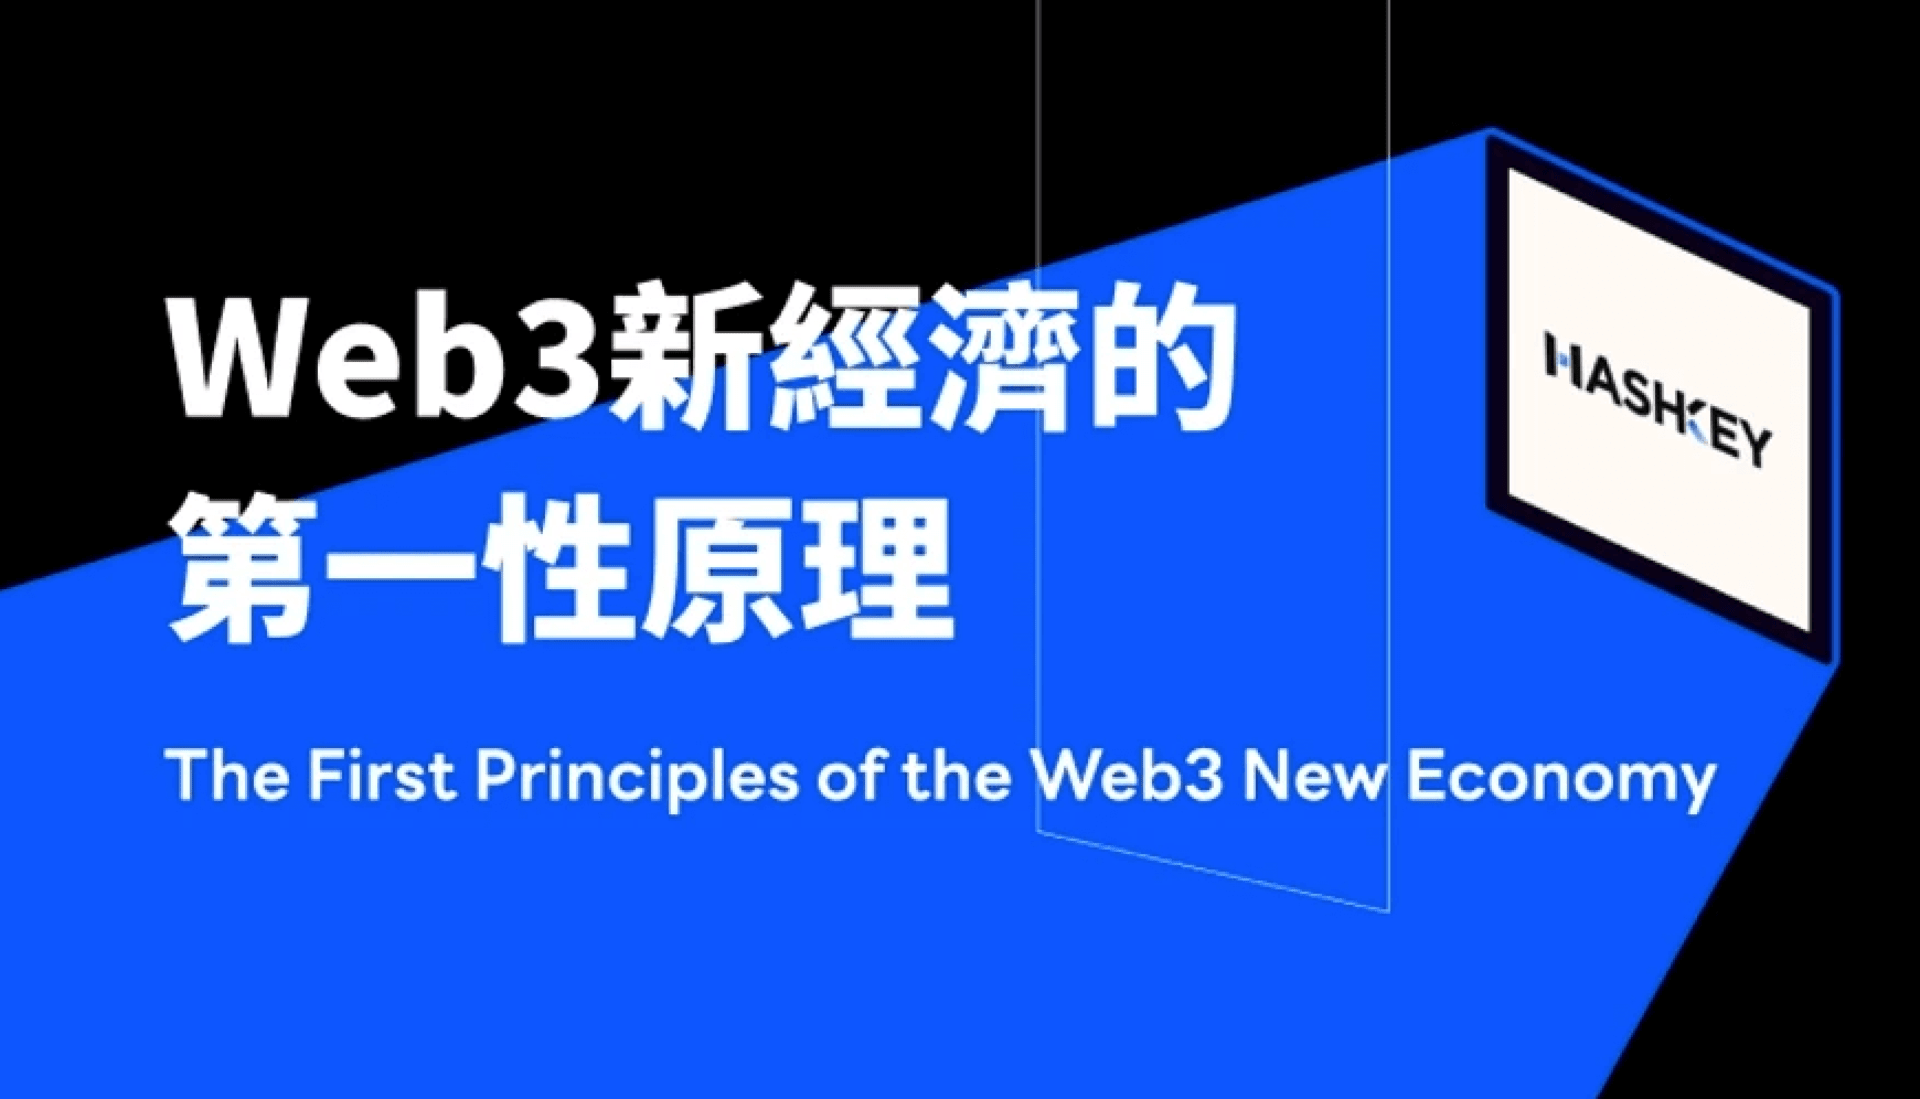 Hashkey：Web3 新經濟的第一性原理